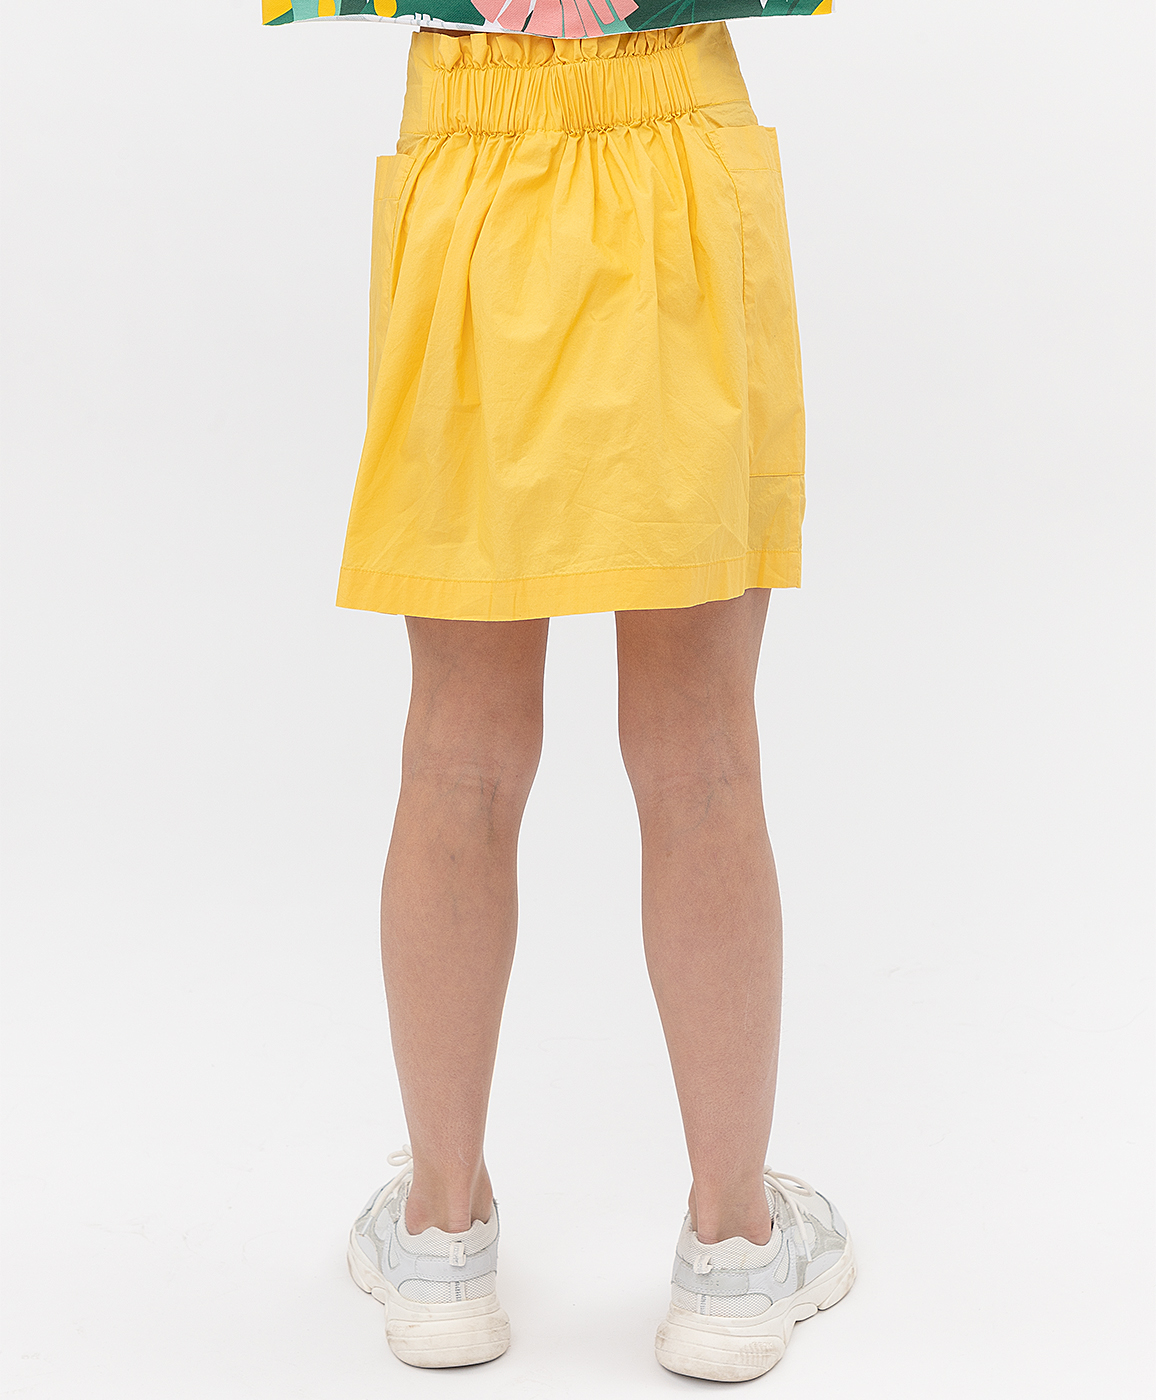 Желтая юбка Button Blue 121BBGJC61032700, размер 152, цвет желтый клеш - фото 3